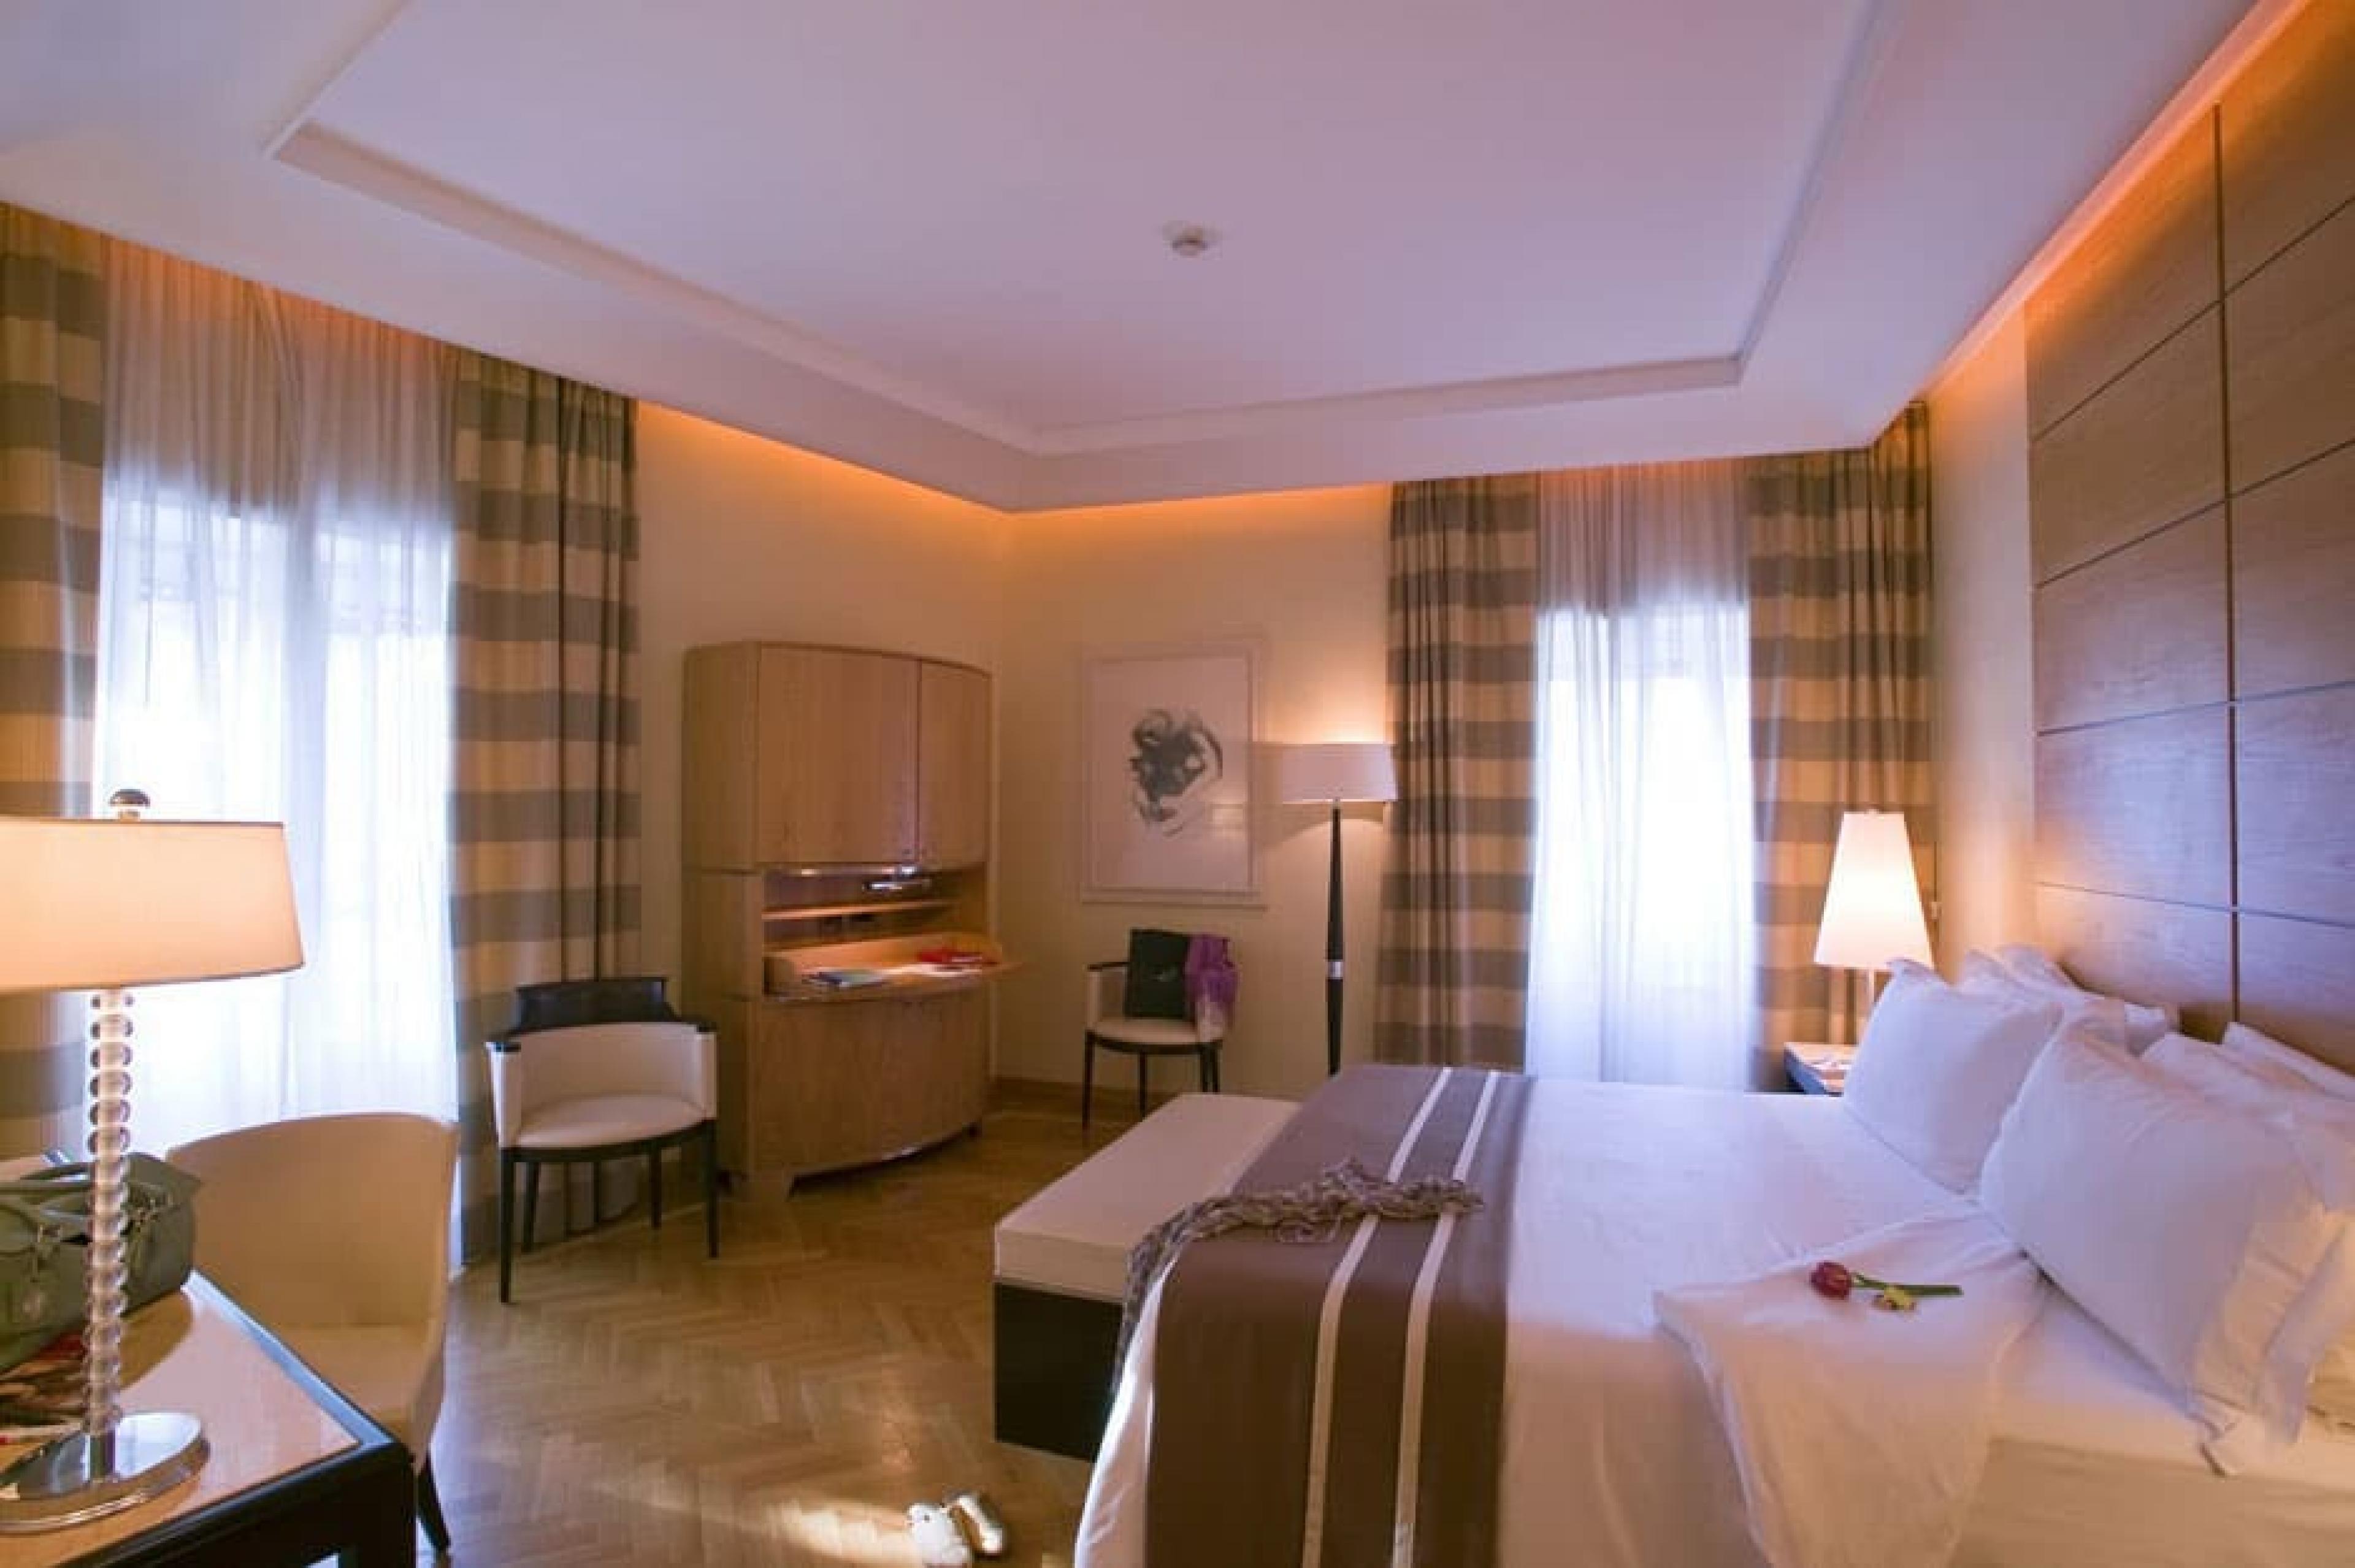 Bedroom - 47 Hotel, Rome